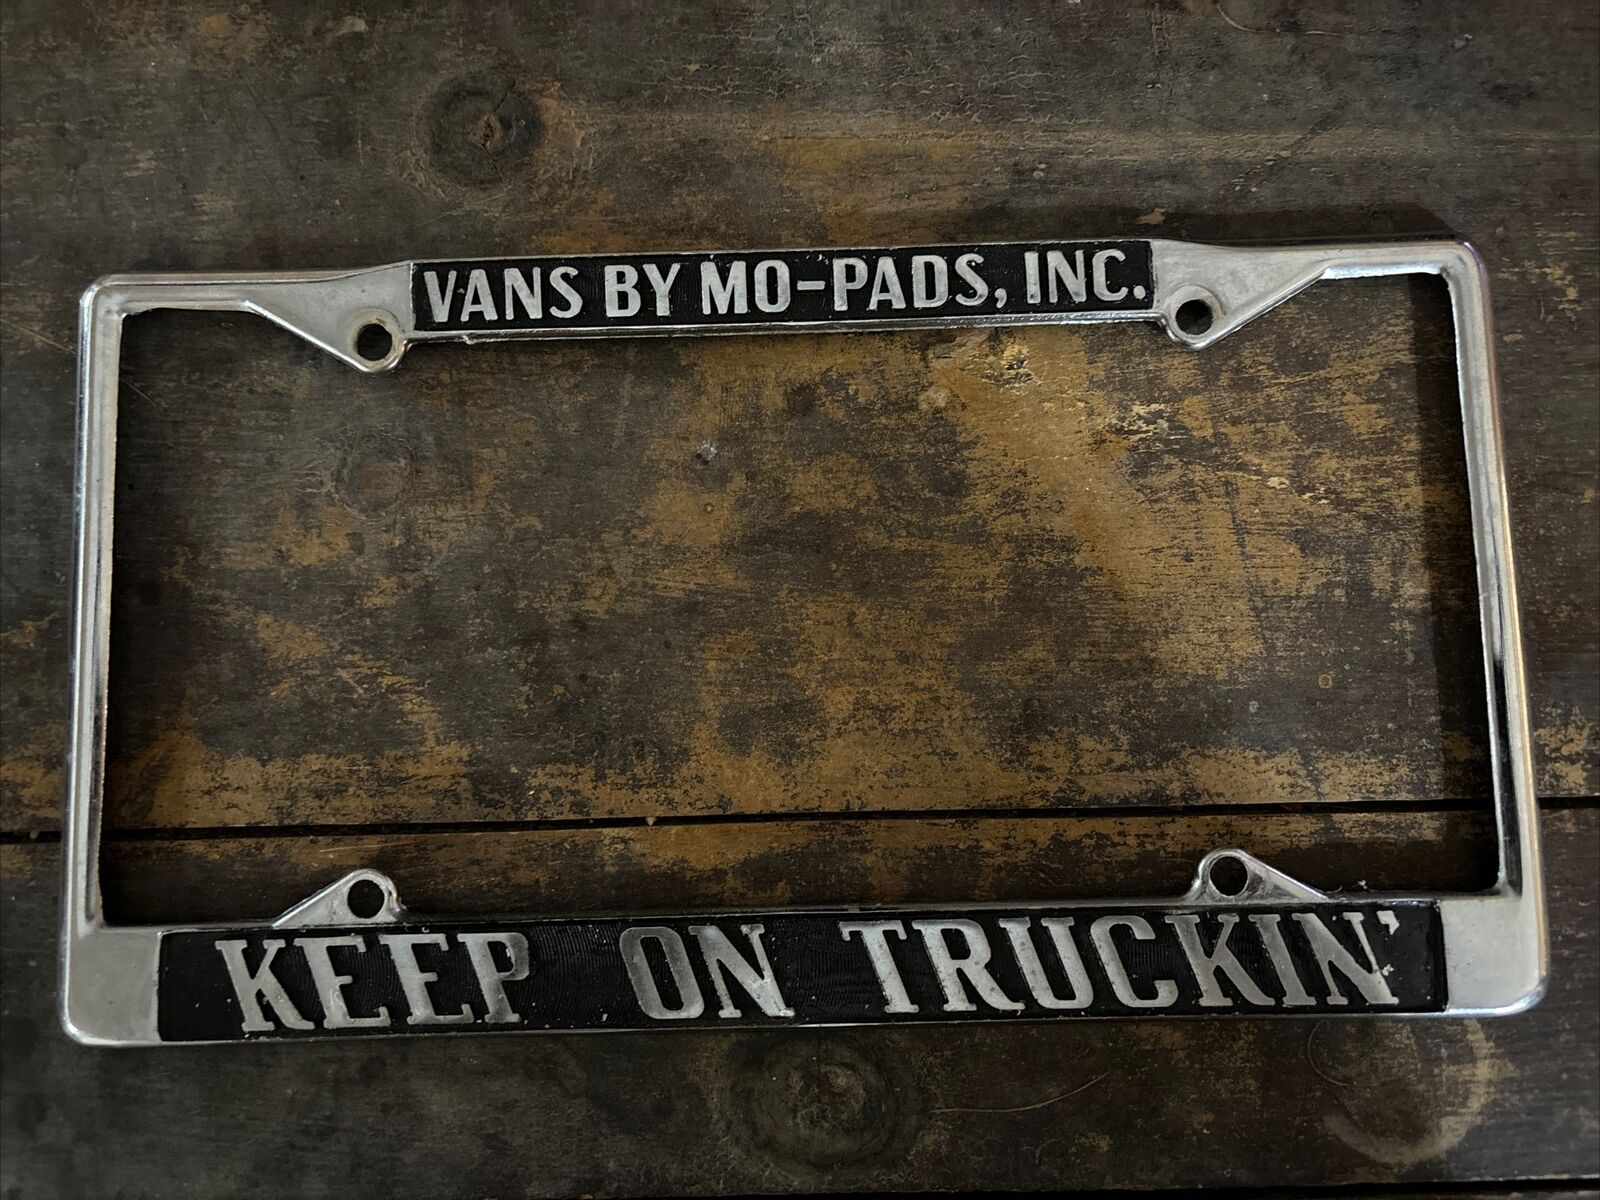 KEEP ON TRUCKIN’  Vintage License Plate Frame Metal Frame VANS BY MO-PADS, INC